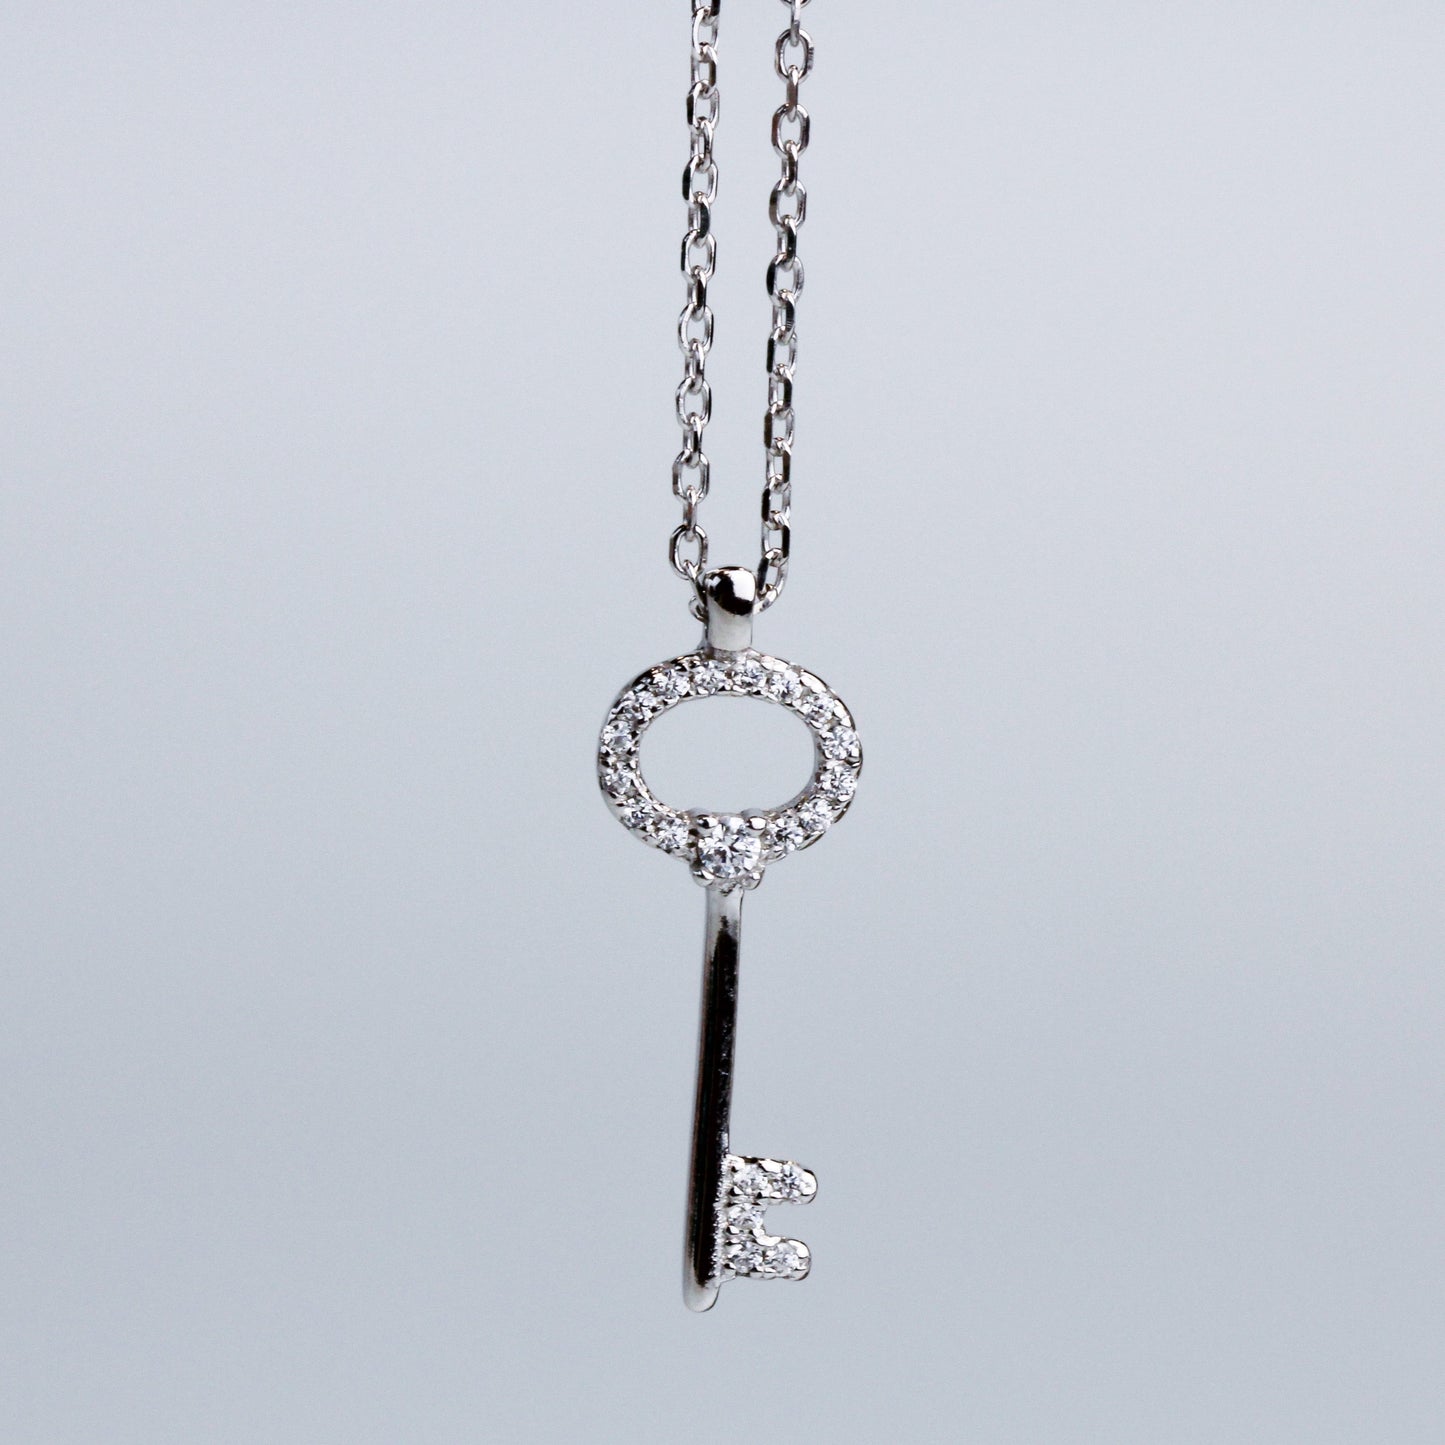 Sparkly Key Pendant Necklace